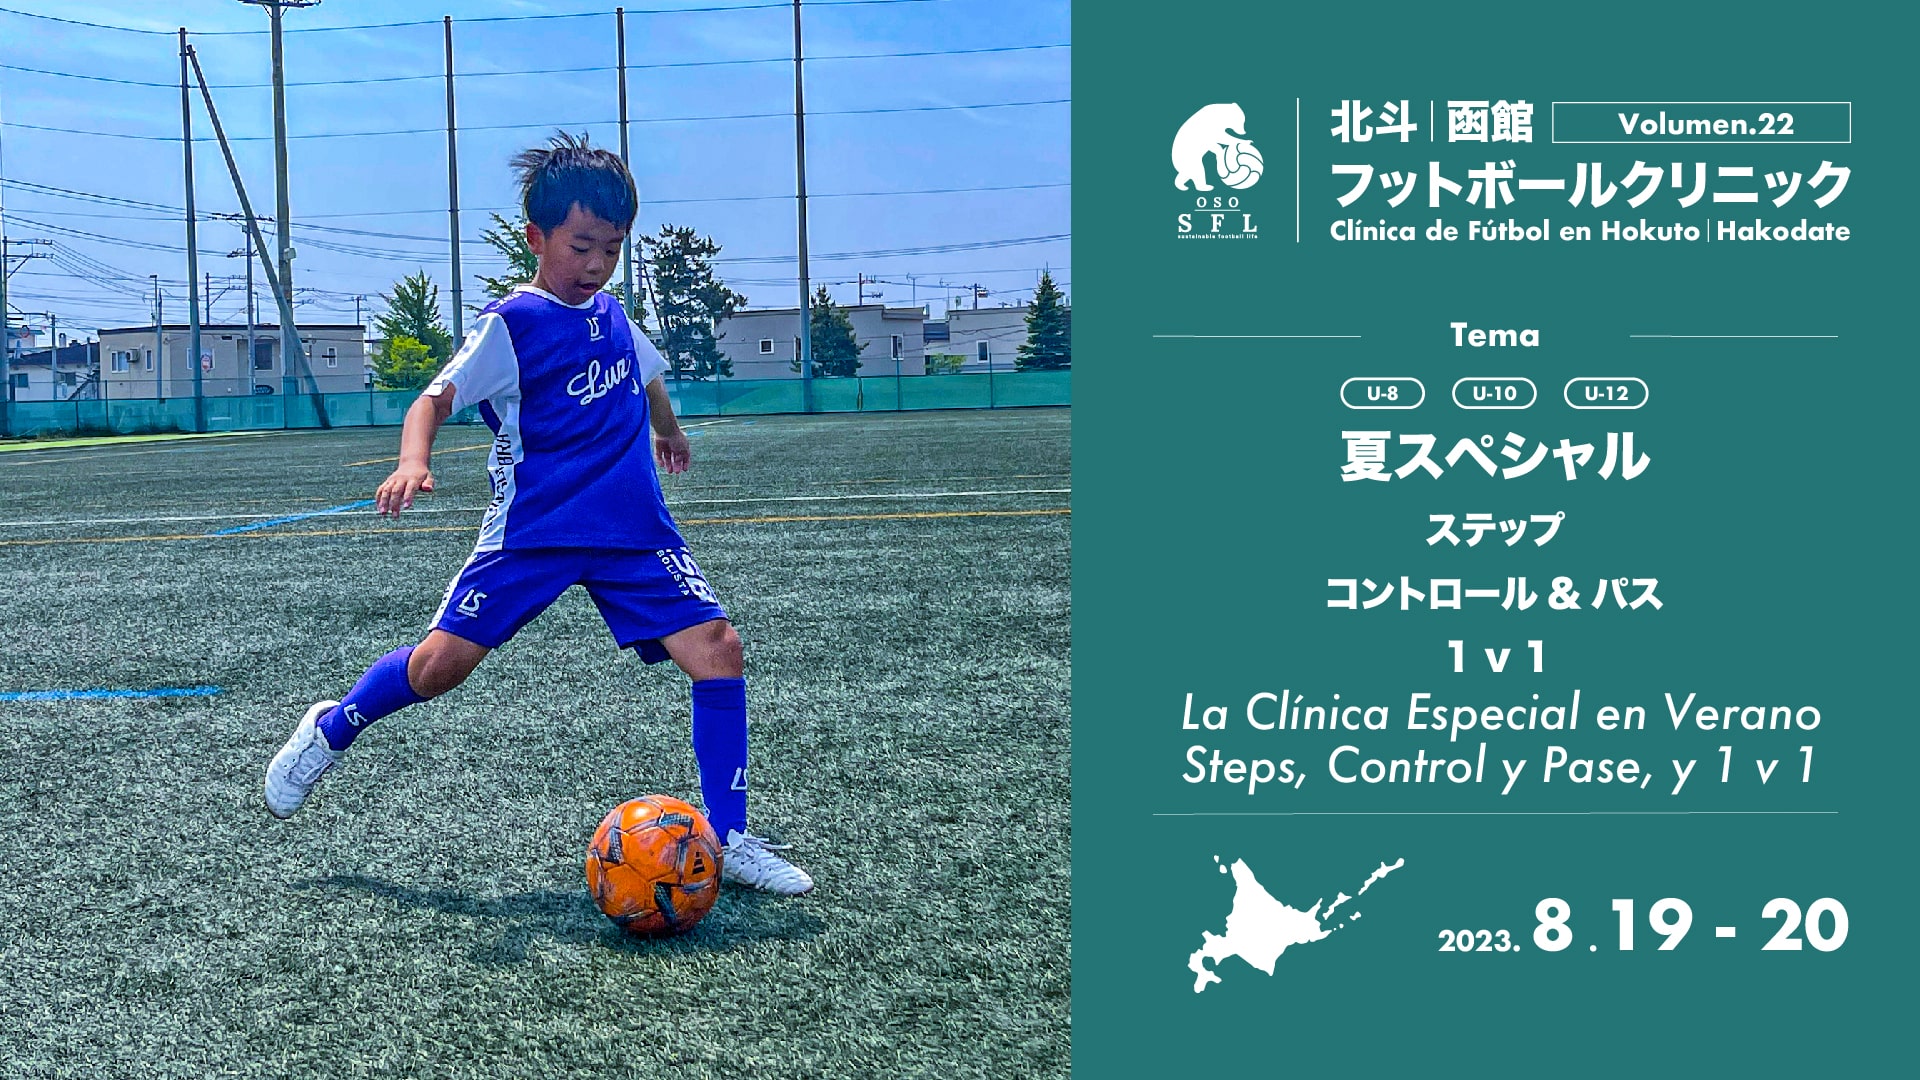 20230612_notice-hokuto-hakodate-football-clinic-2023-vol21_1920px-min